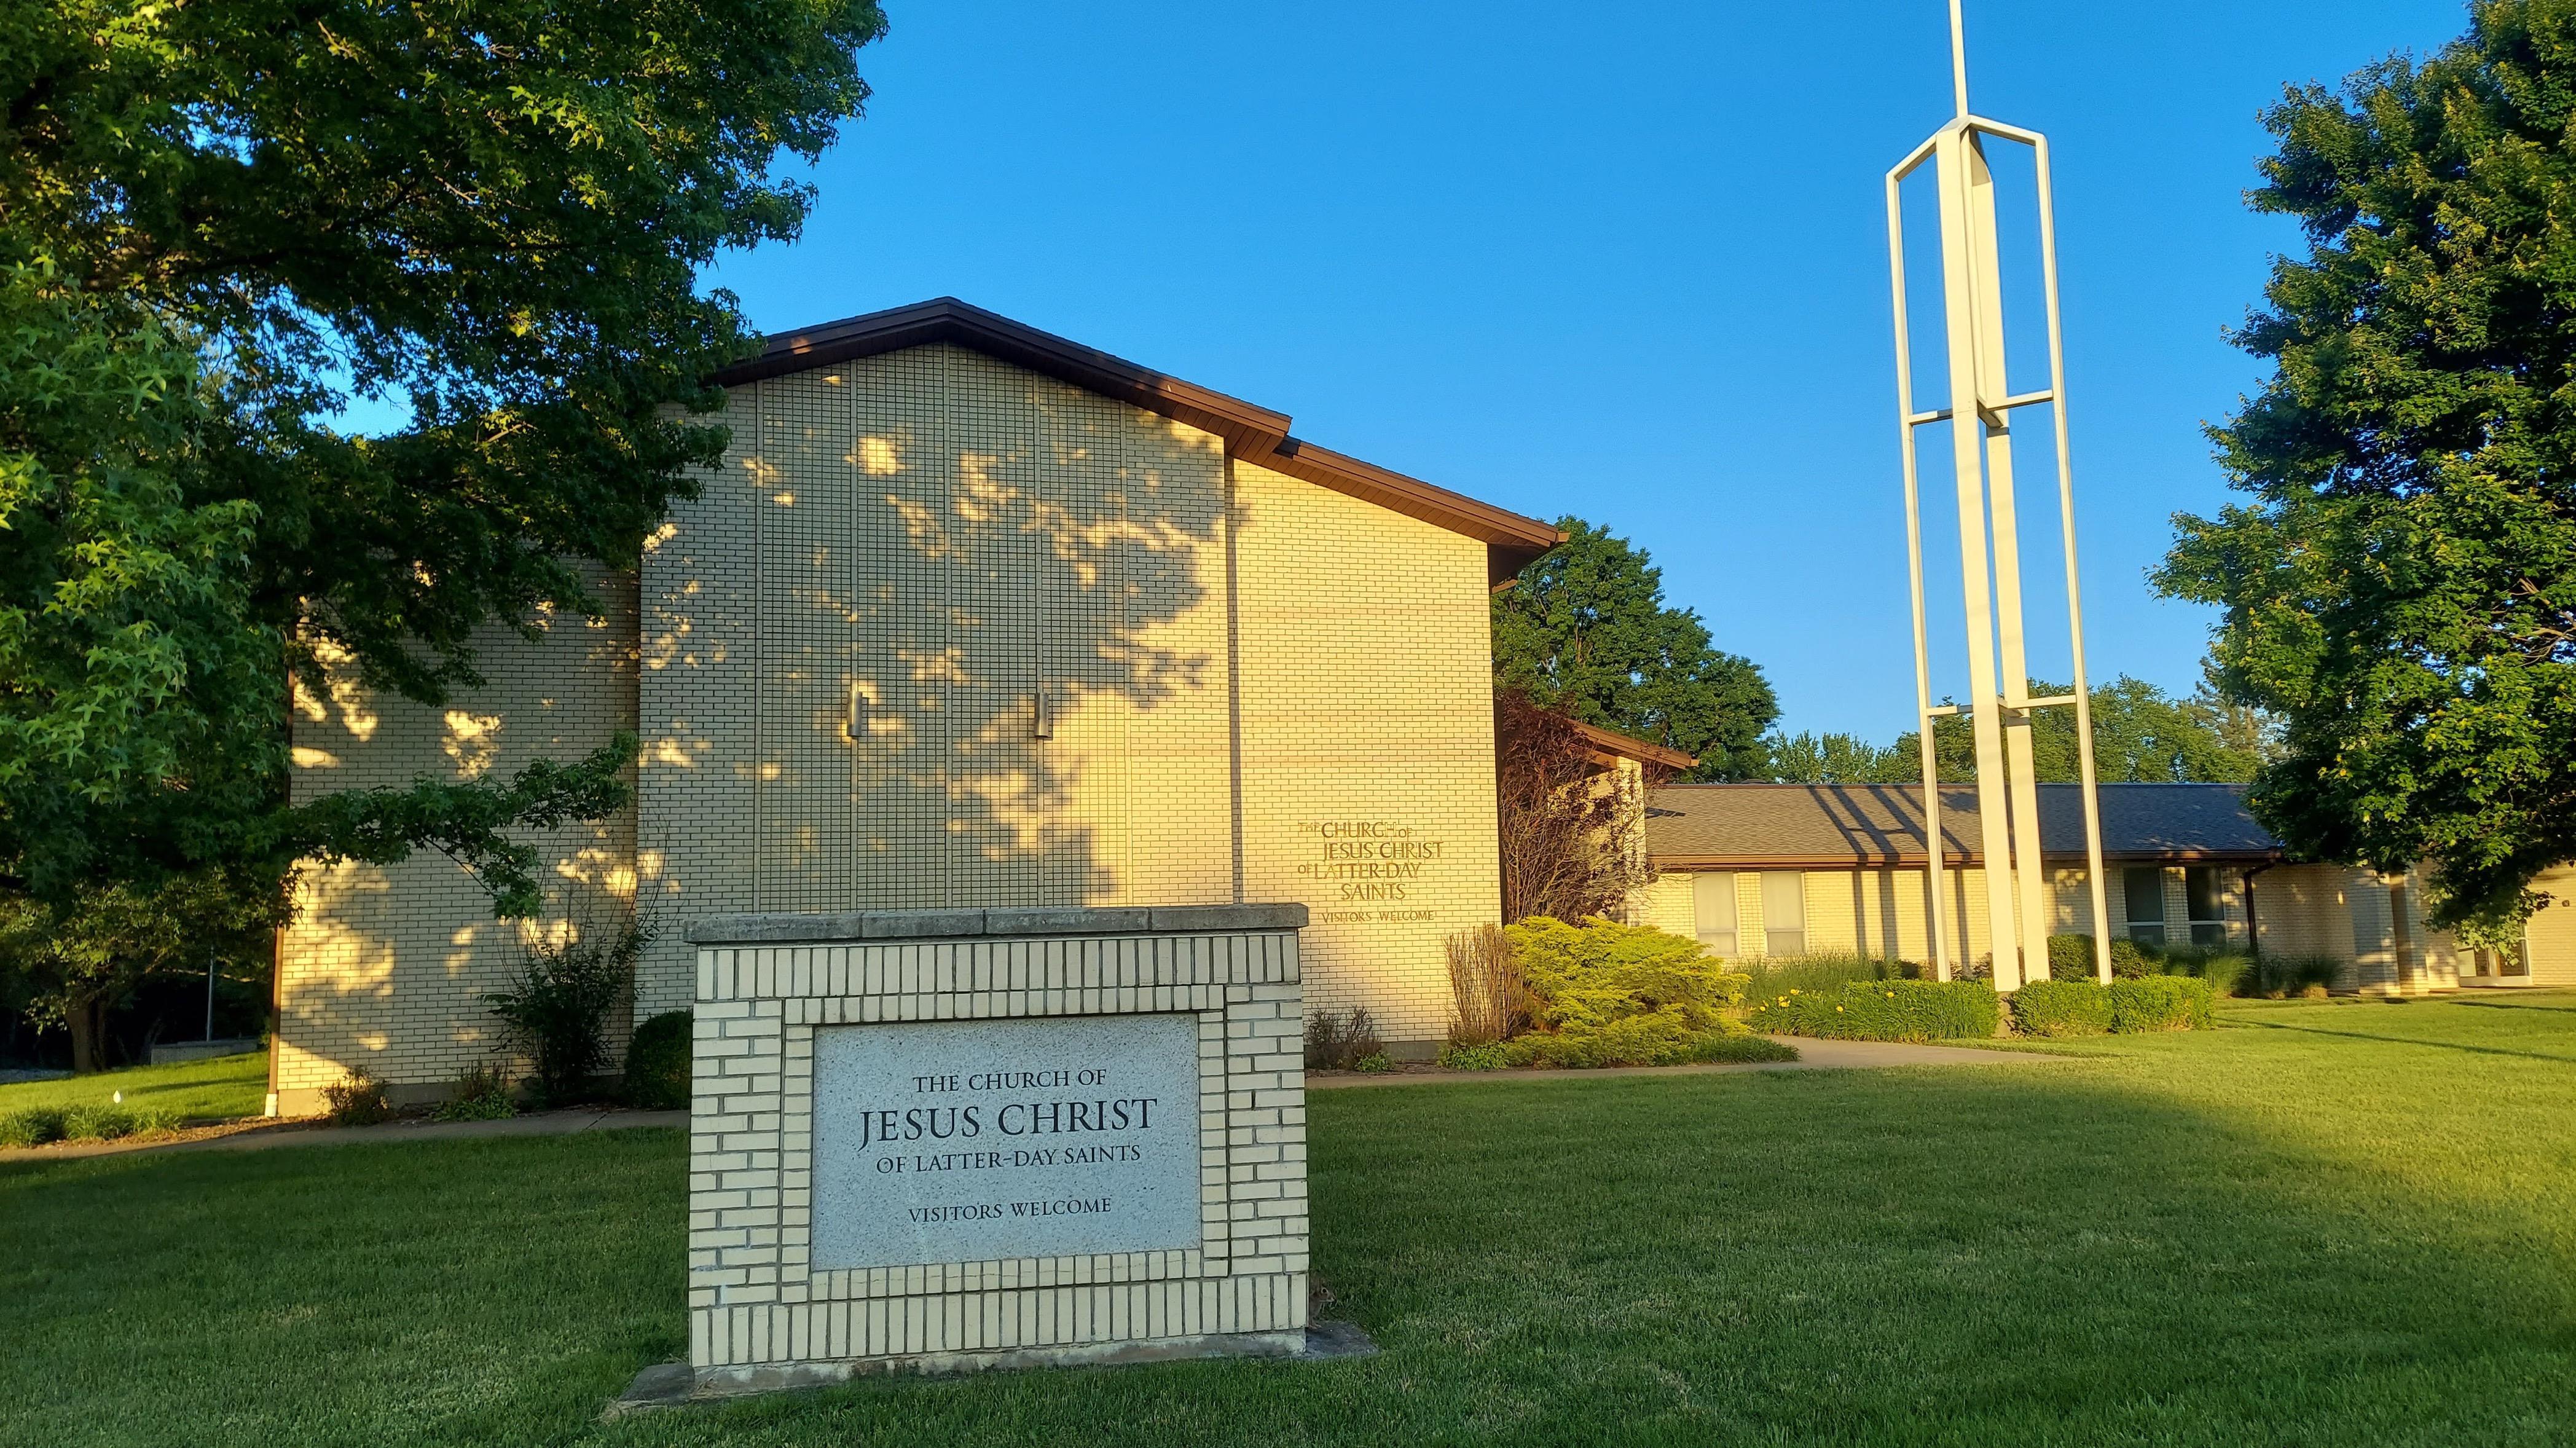 Photo of The Church of Jesus Christ of Latter-day Saints located in Monett, Missouri exterior.